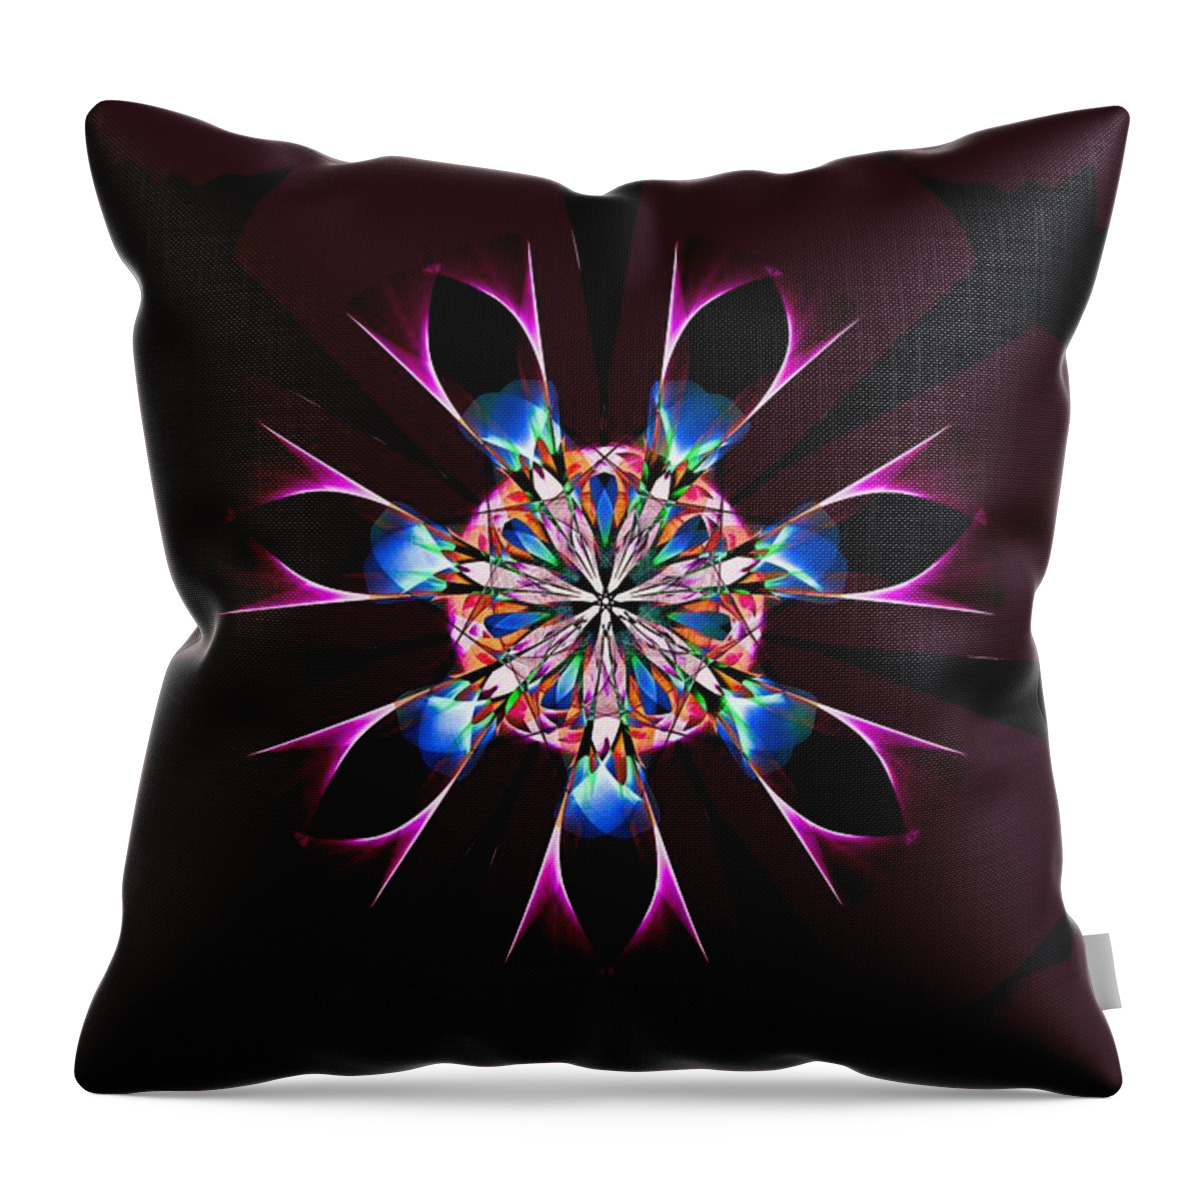 Fine Art Throw Pillow featuring the digital art Mandala 032619 by David Lane